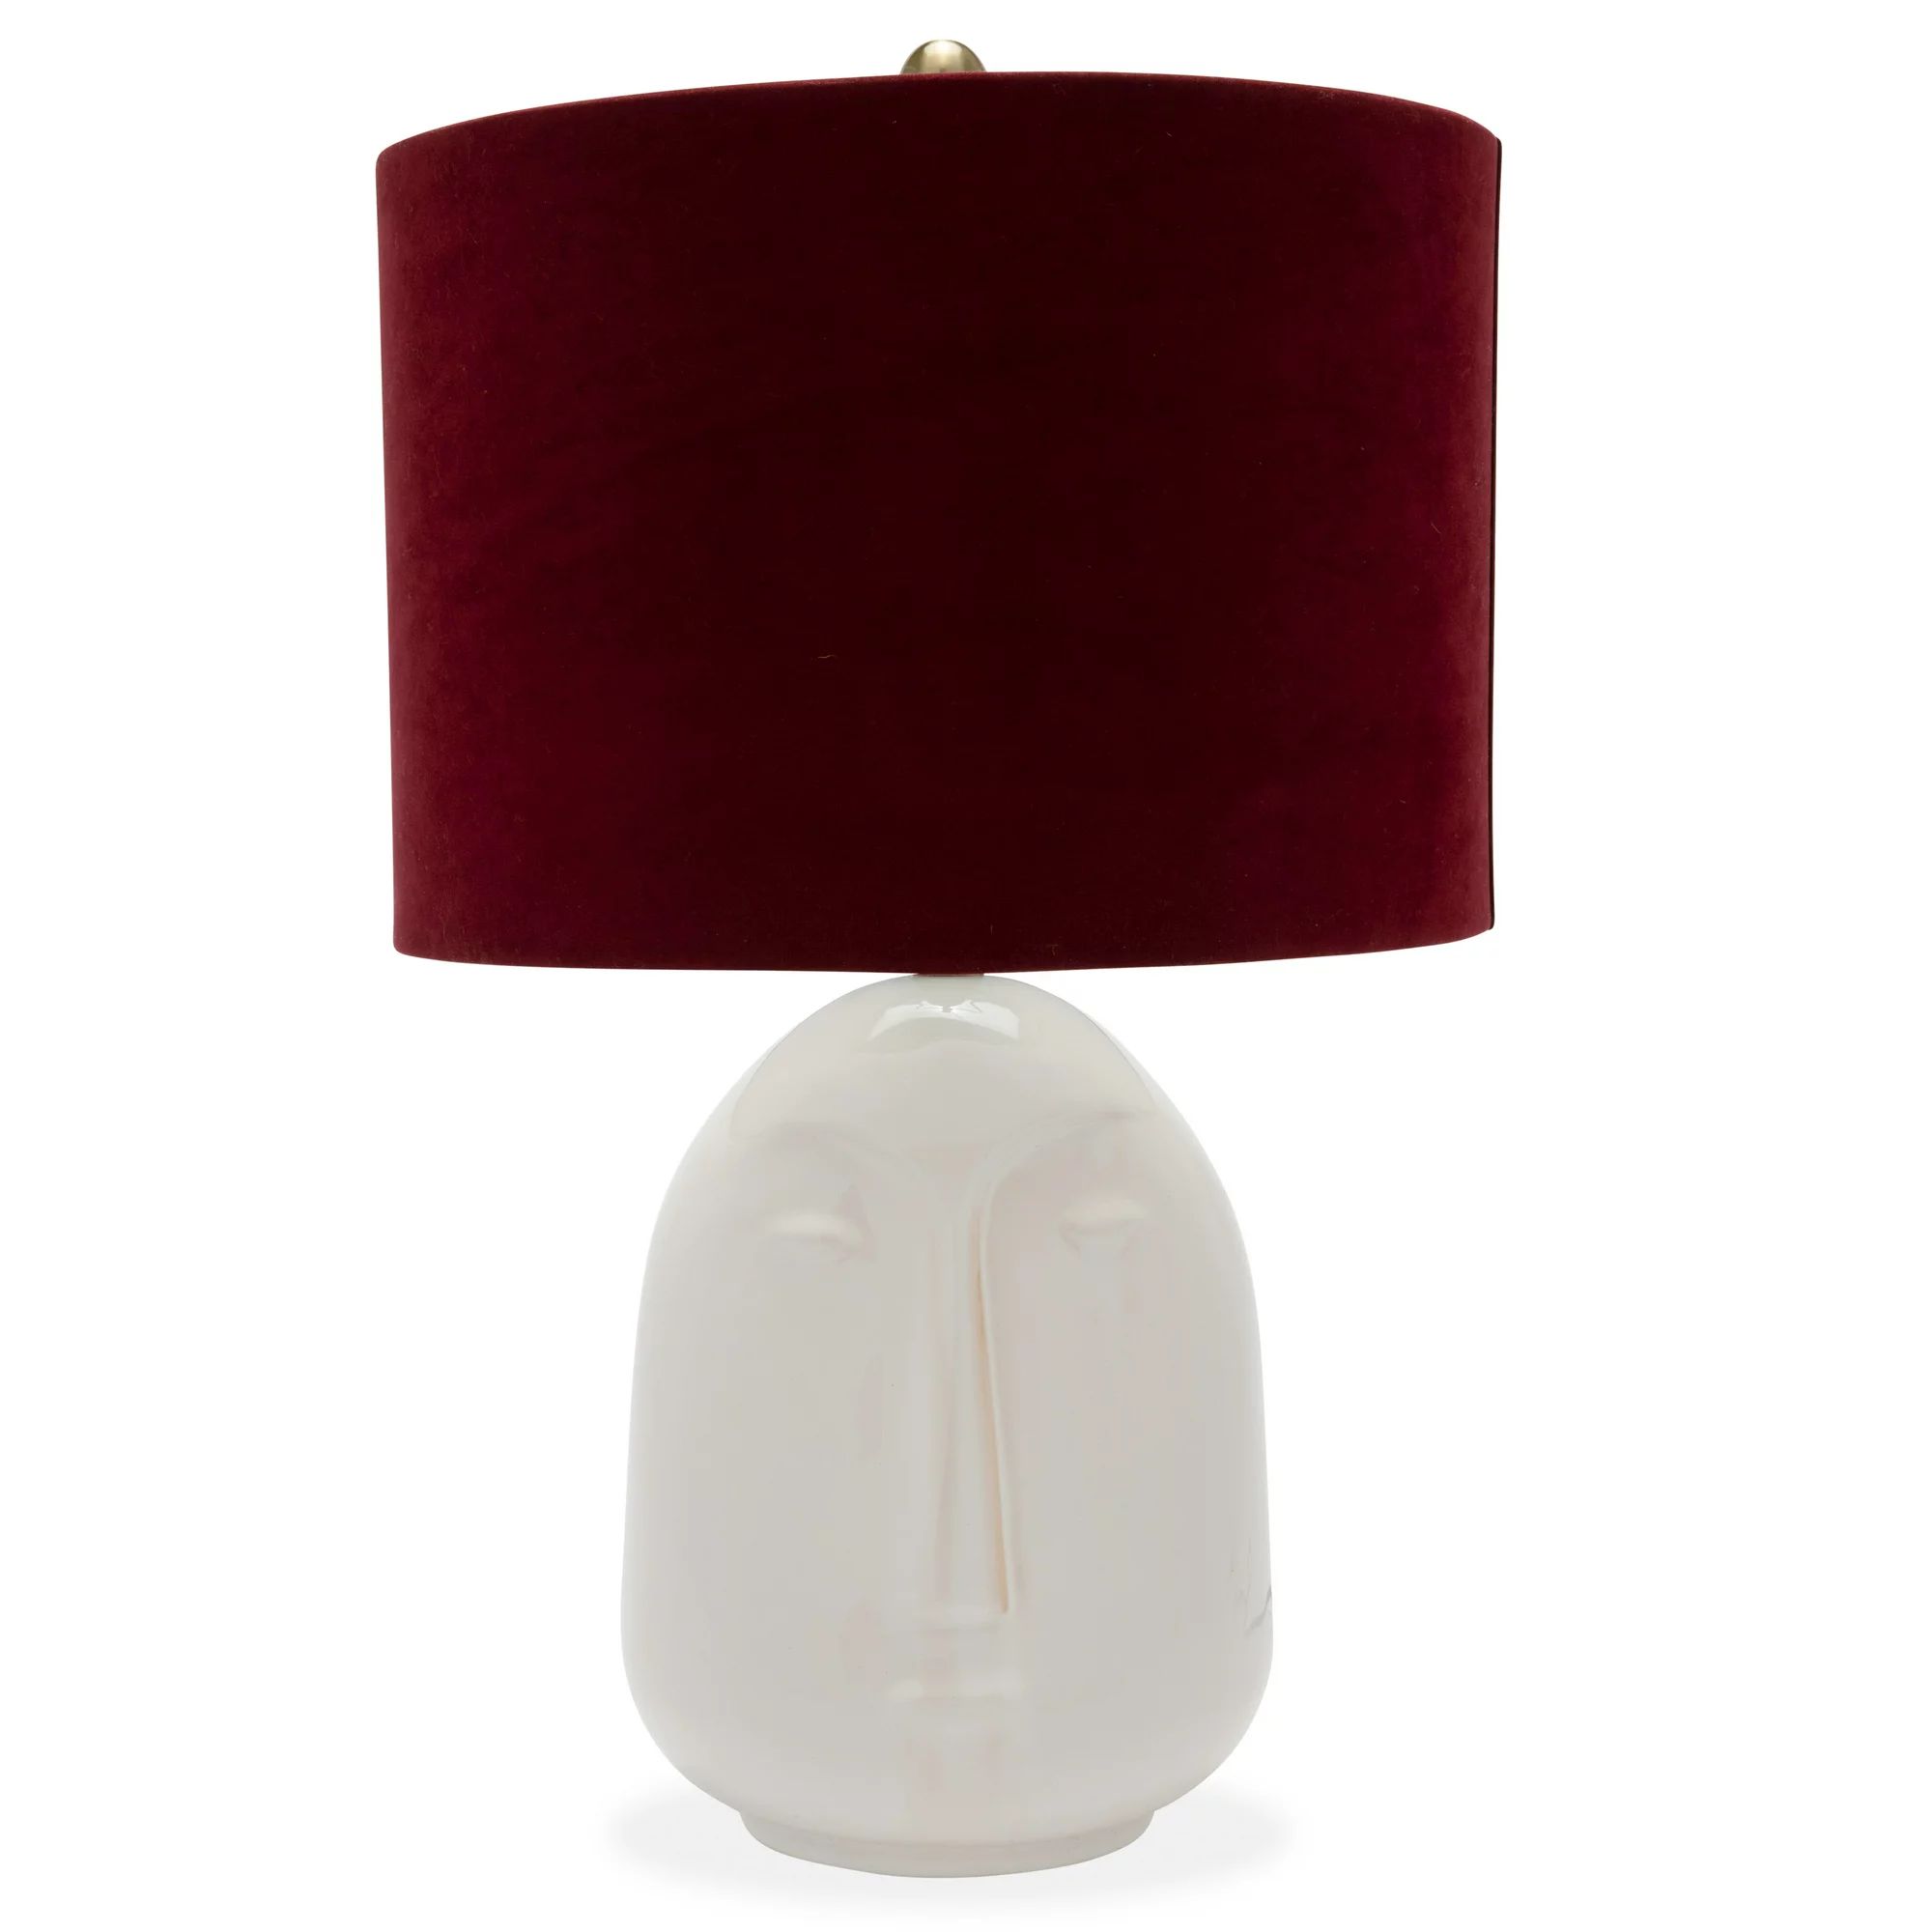 Ivory Ceramic Face Lamp with Wine Velvet Shade by Drew Barrymore Flower Home | Walmart (US)